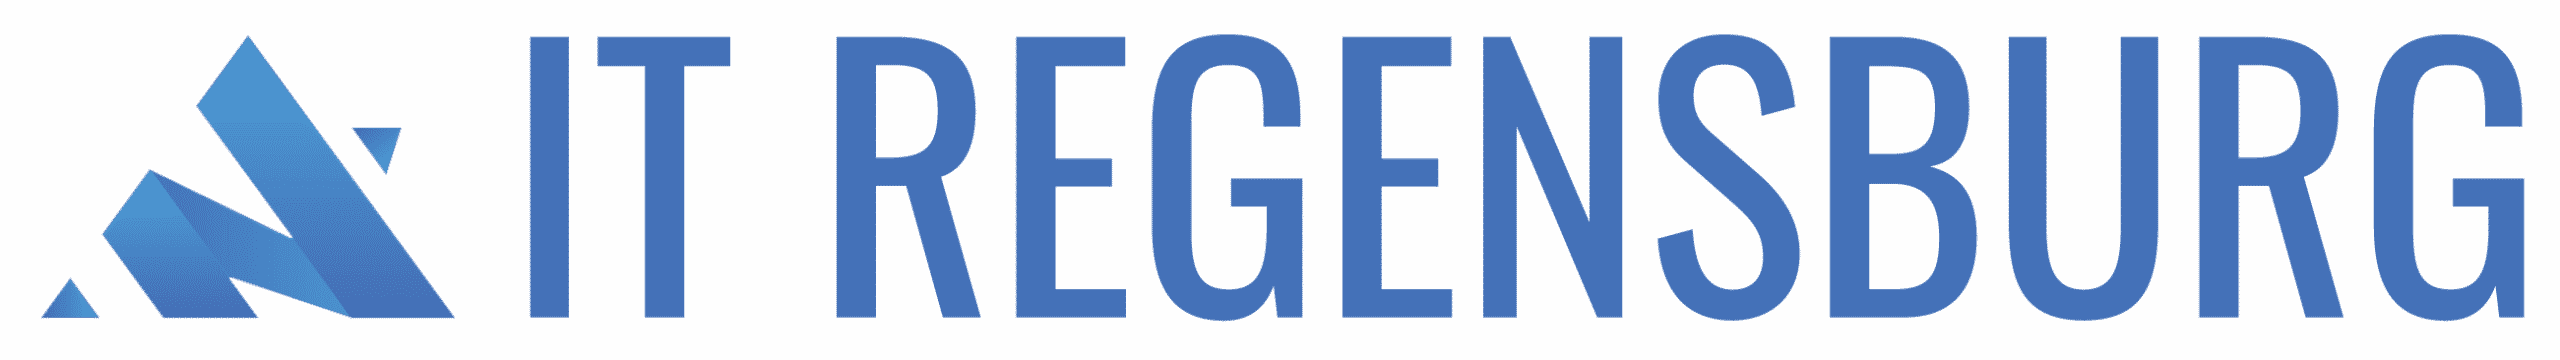 Logo IT-Service Regensburg blau